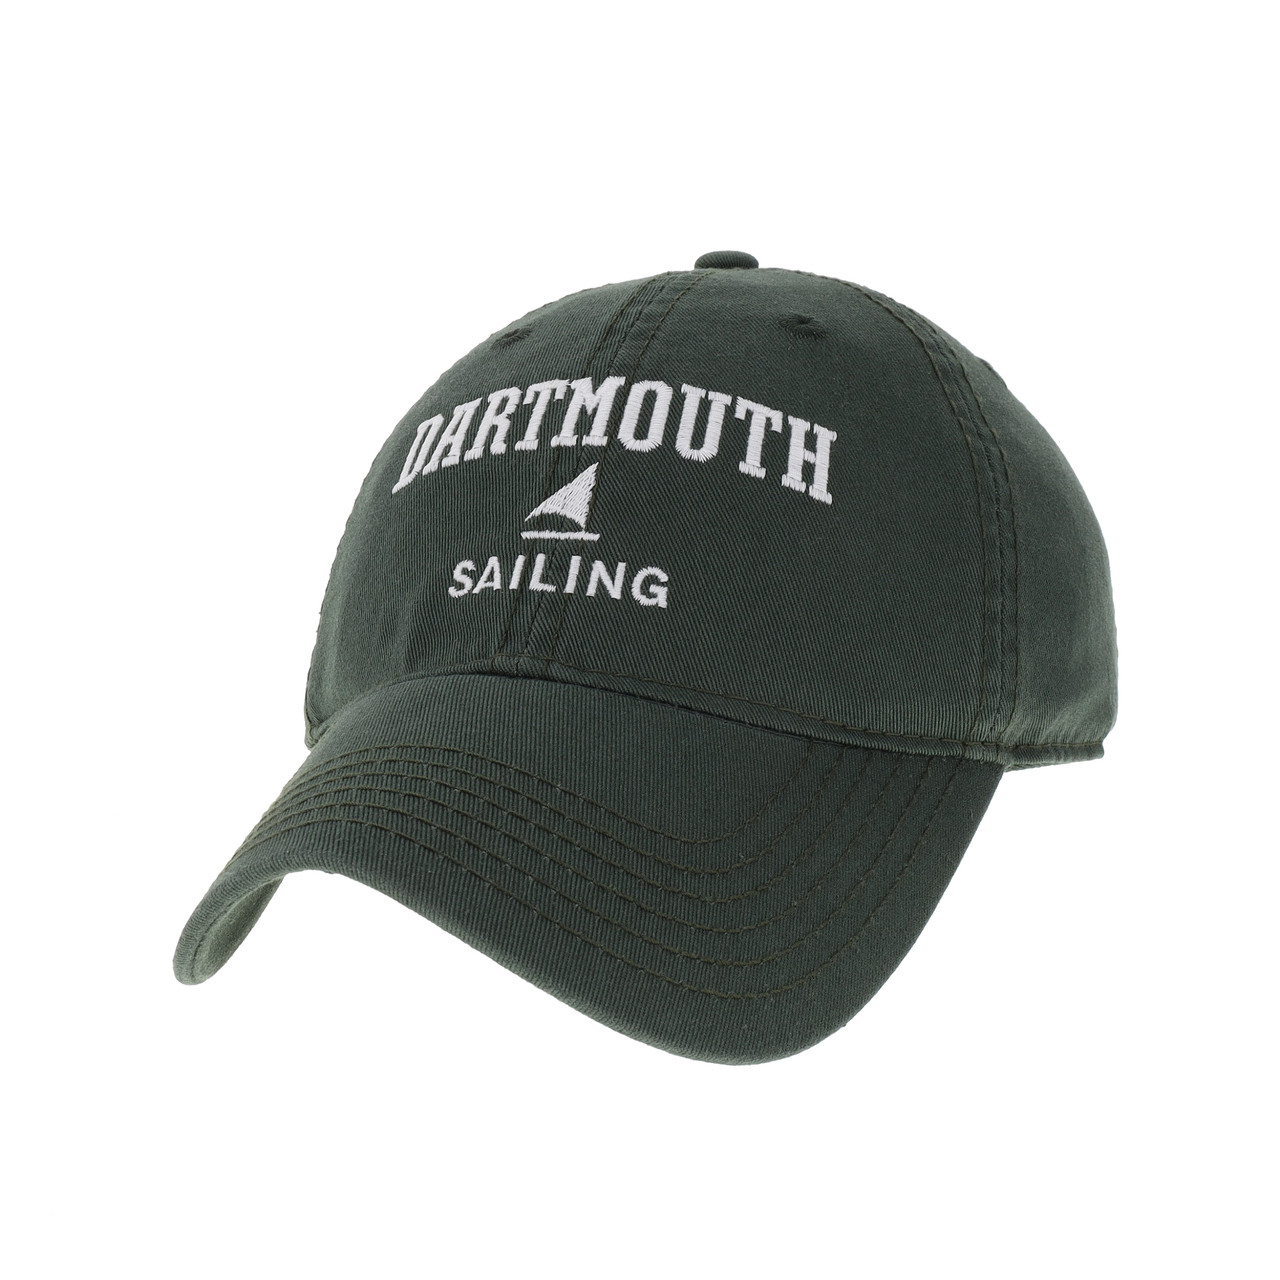 Dartmouth Sailing Hat, Dartmouth College Sailing caps